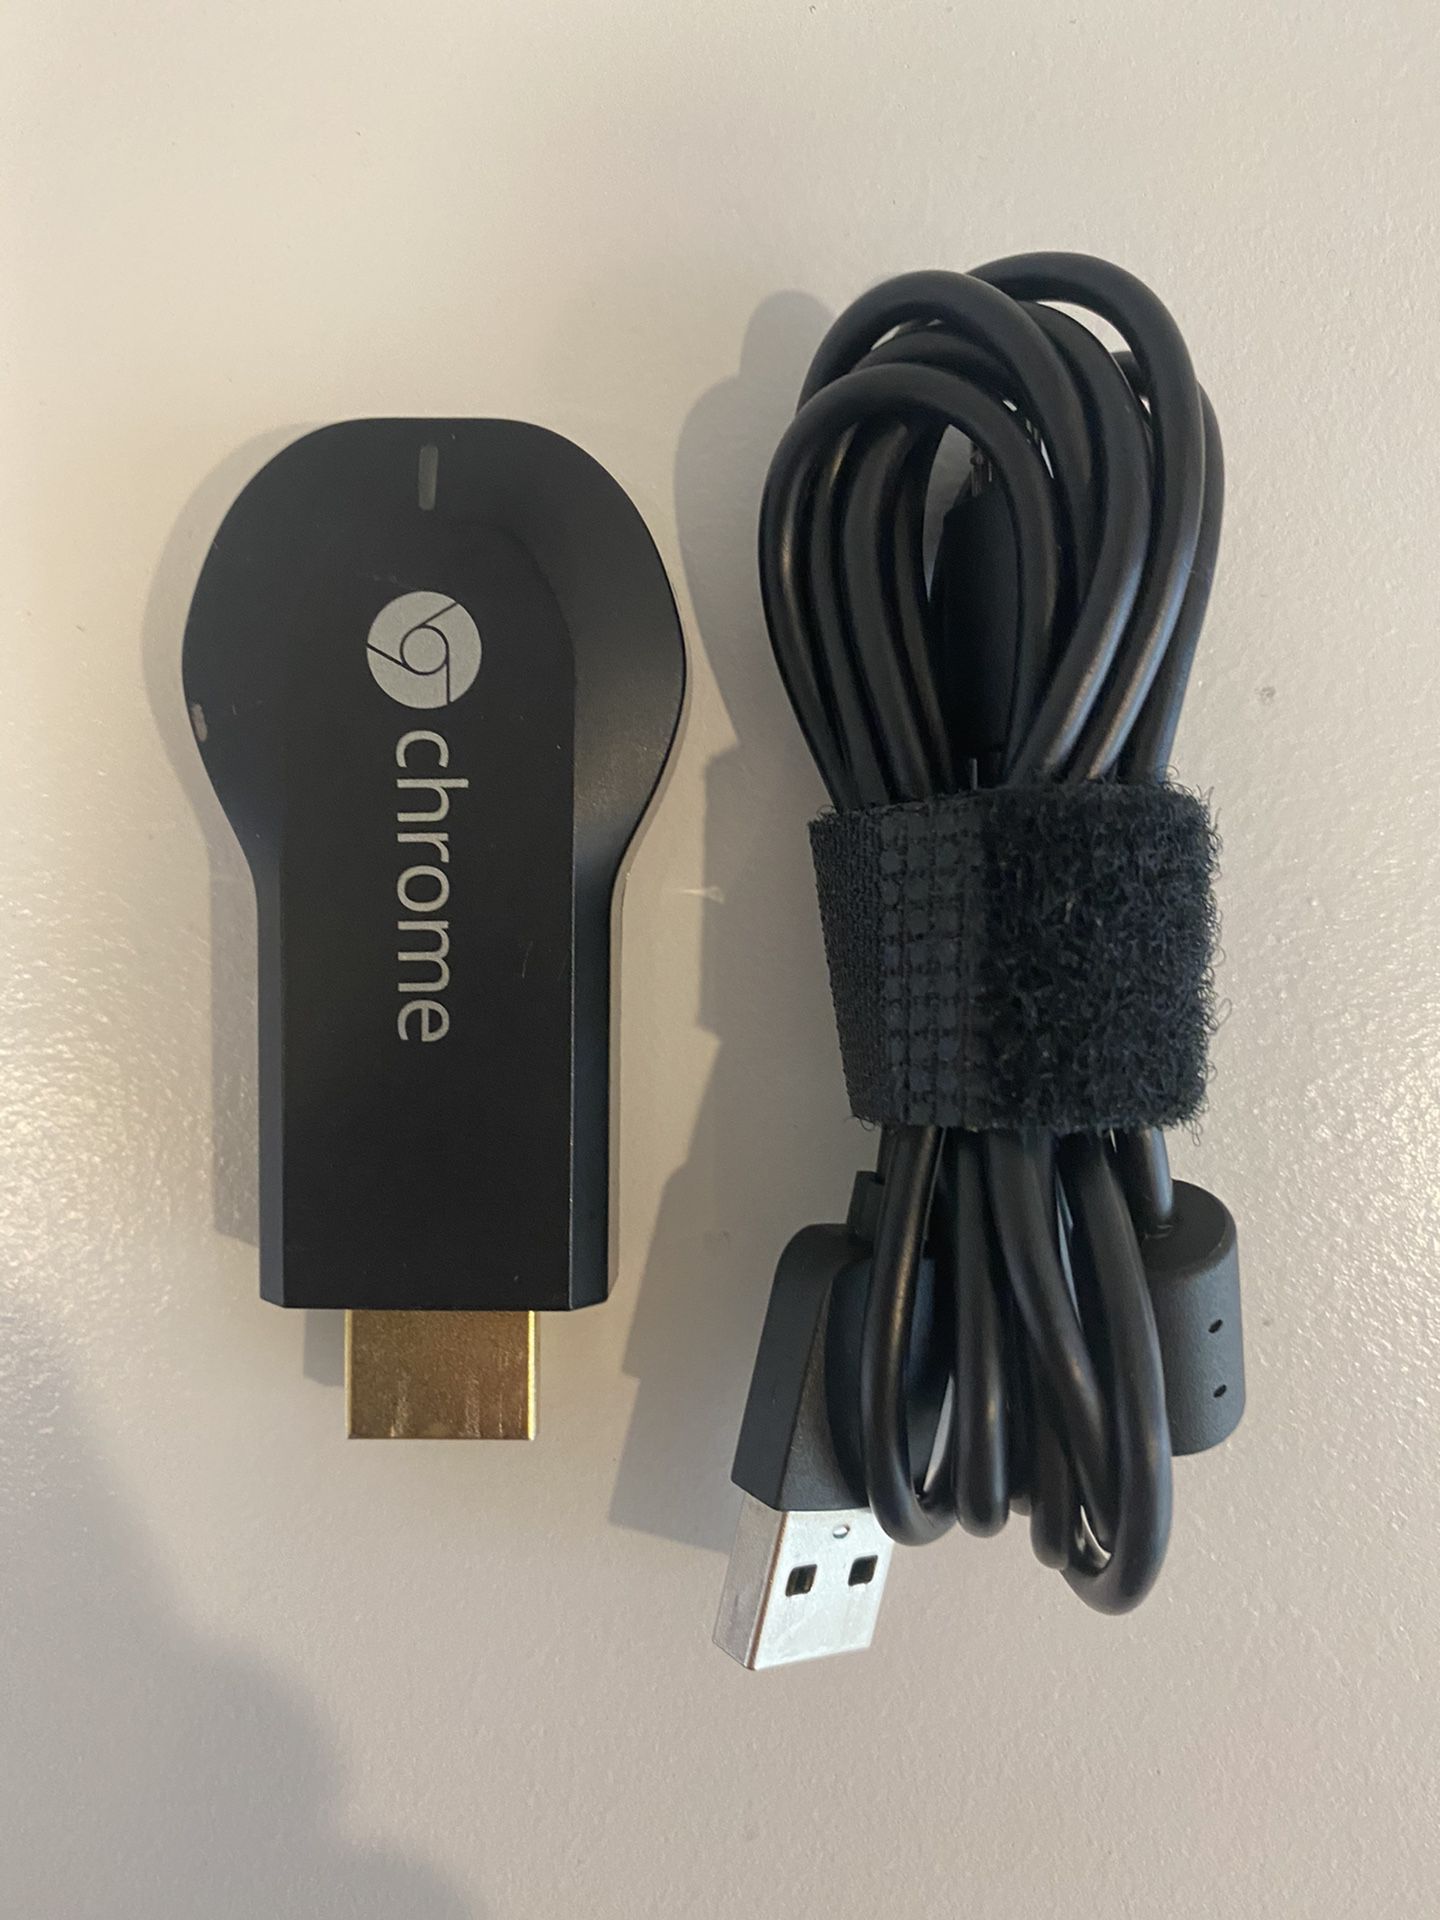 1st Gen Chromecast